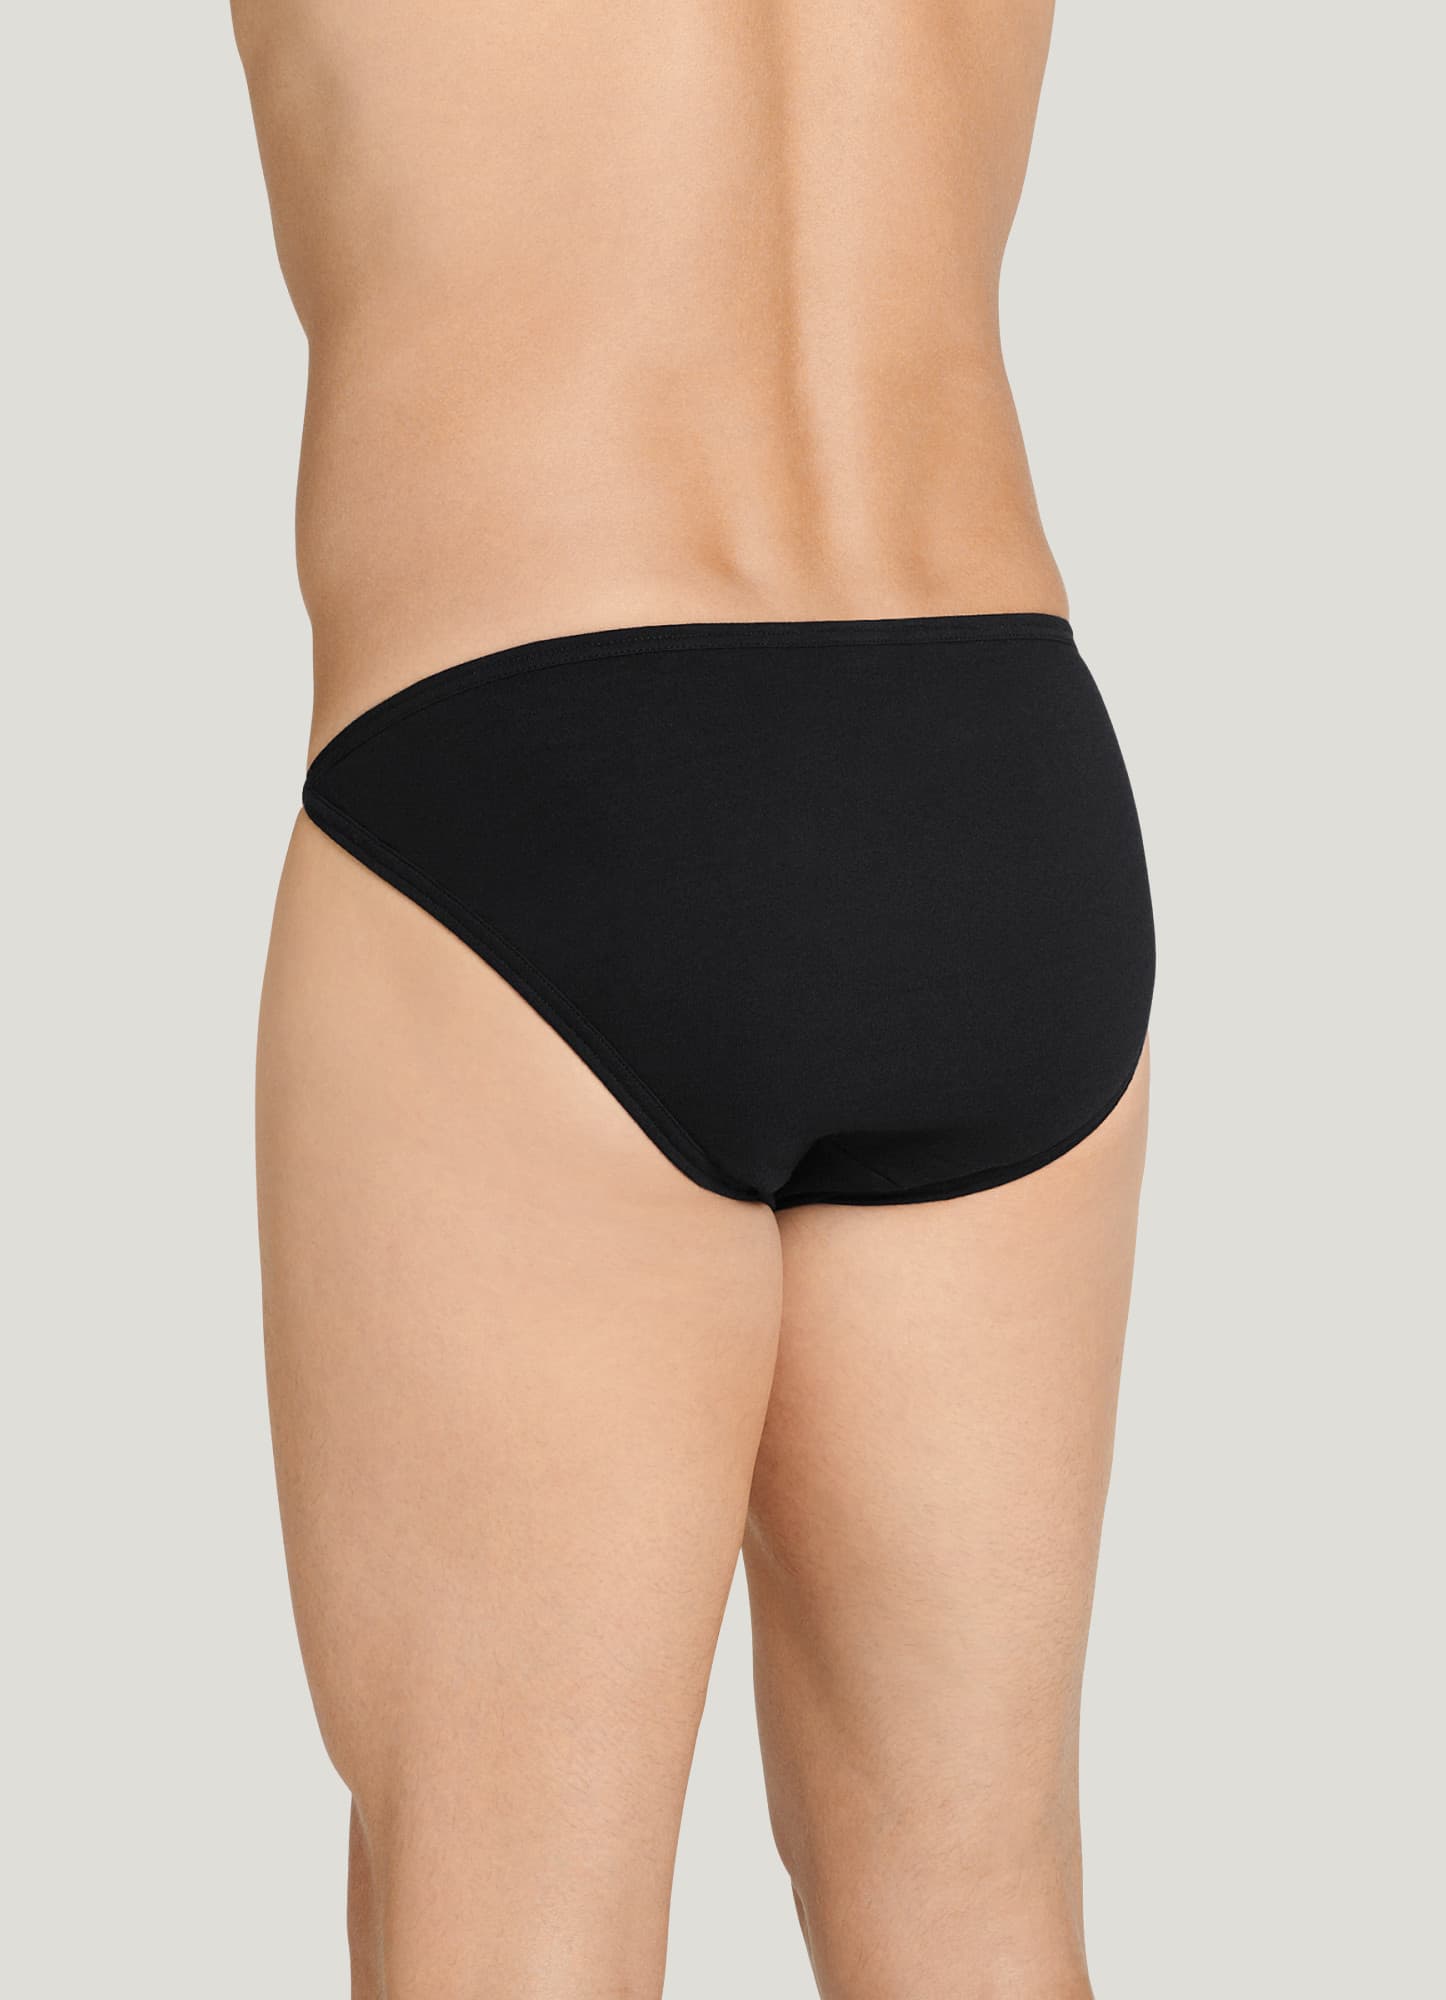 Buy Jockey Low Waist Cotton Bikini Stretch Brief- Black at Rs.219 online